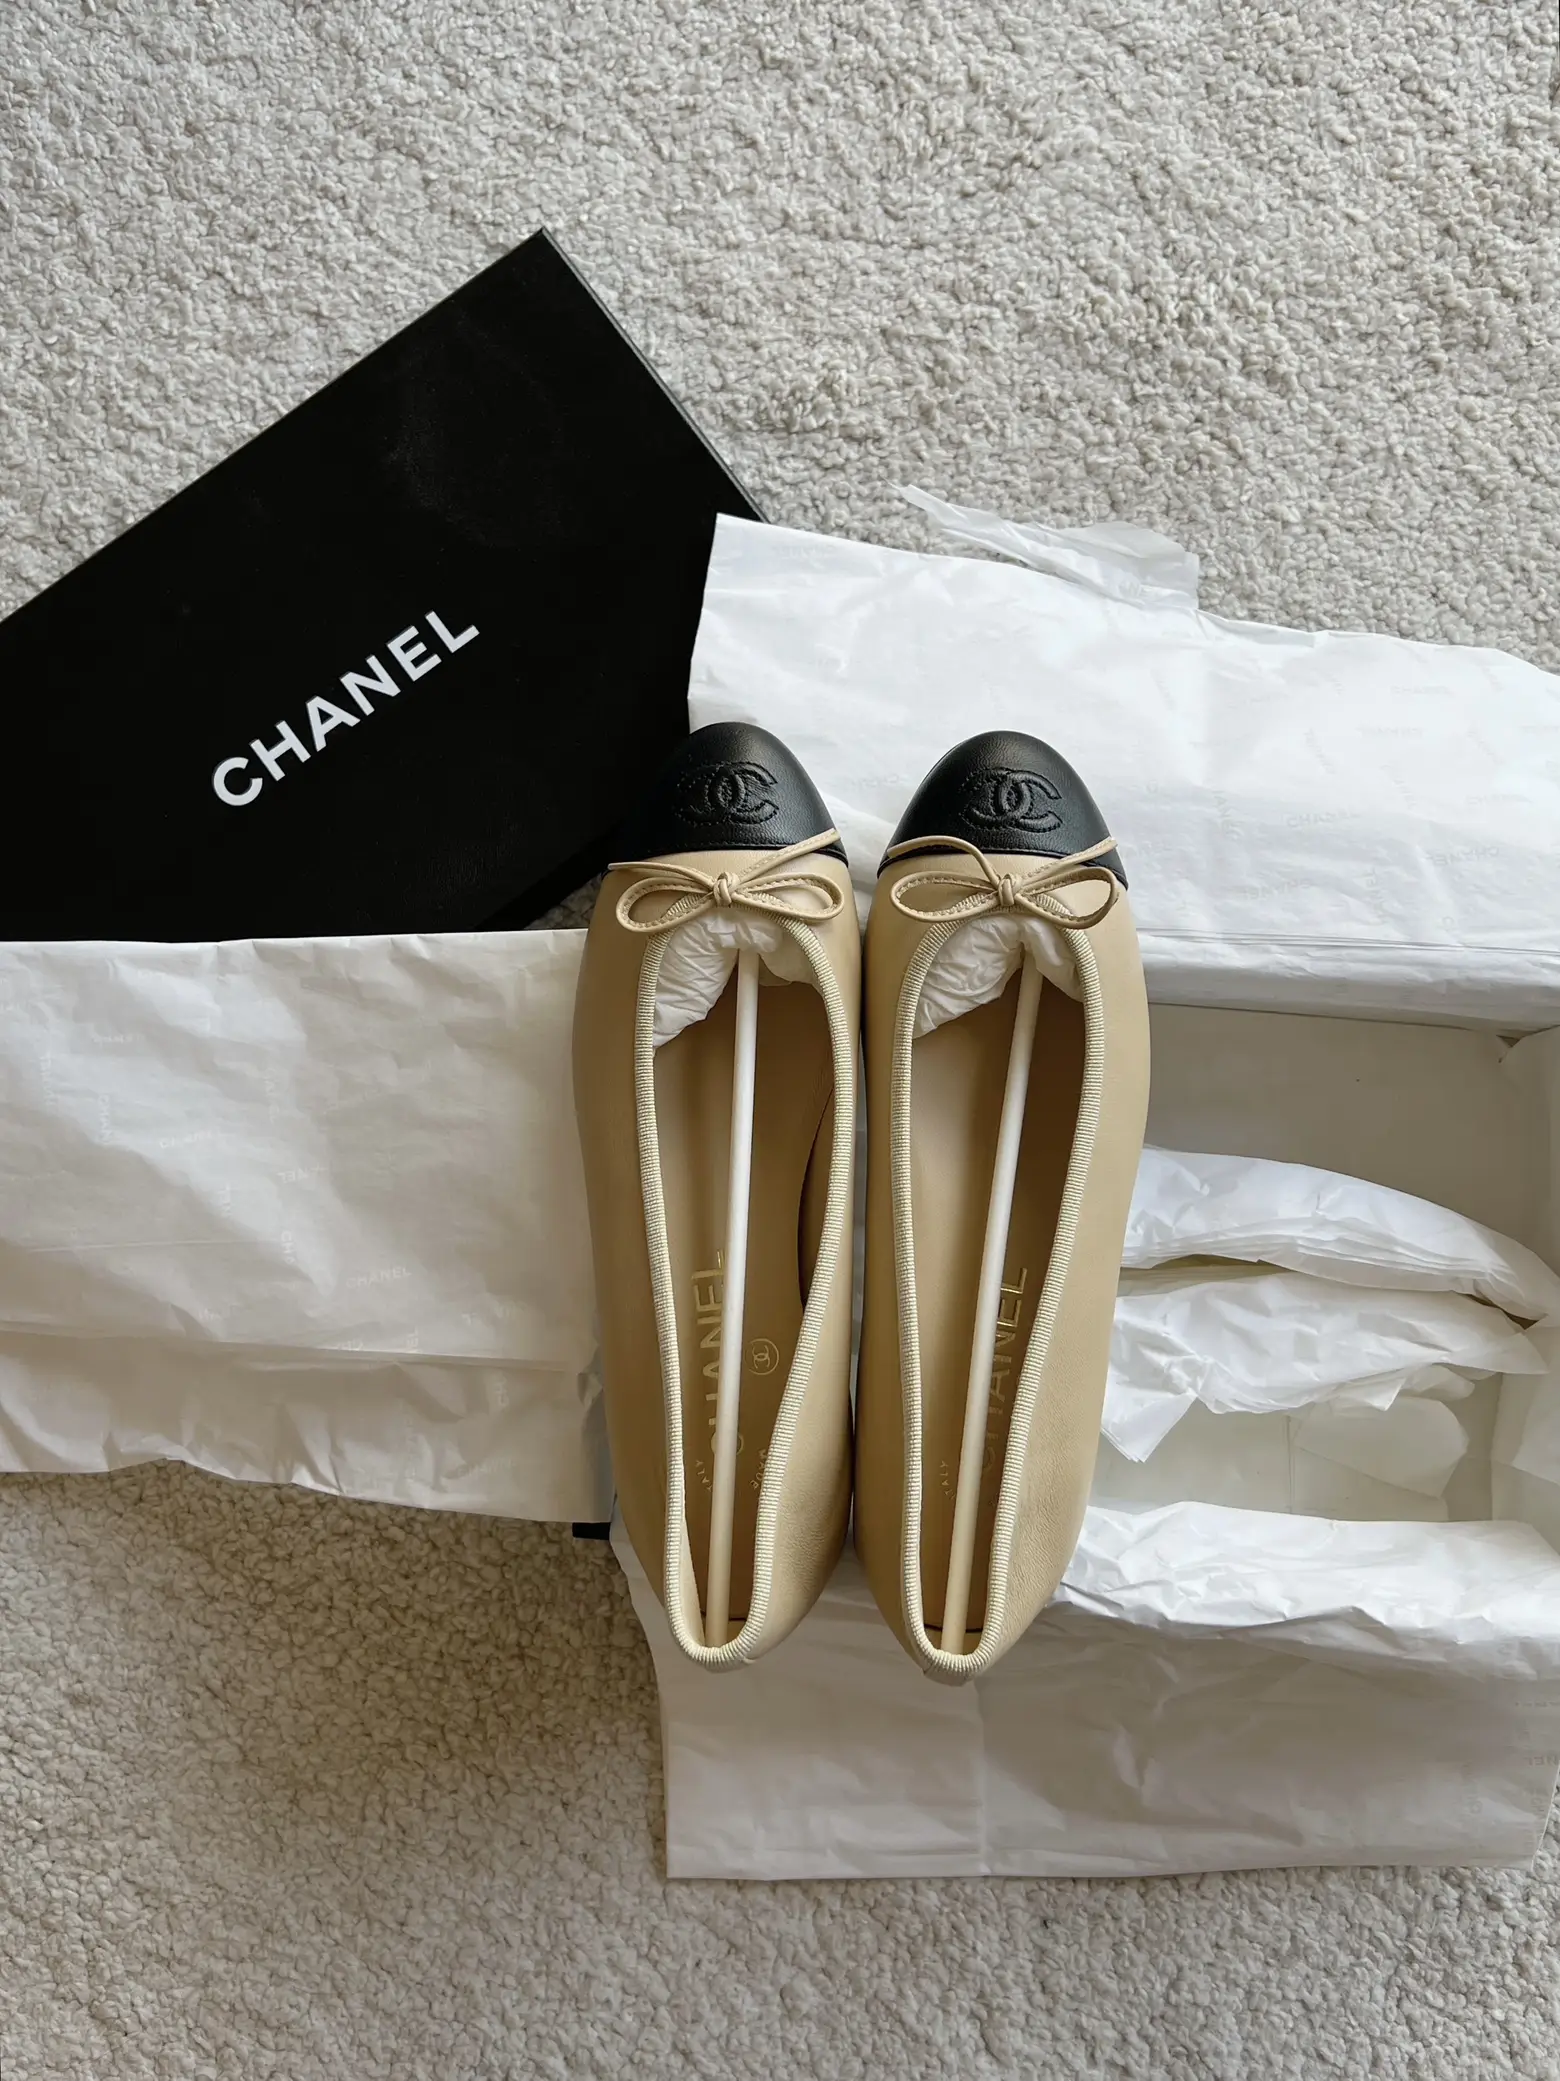 How to dress like a Chanel Model✨, Galeri disiarkan oleh Fayra